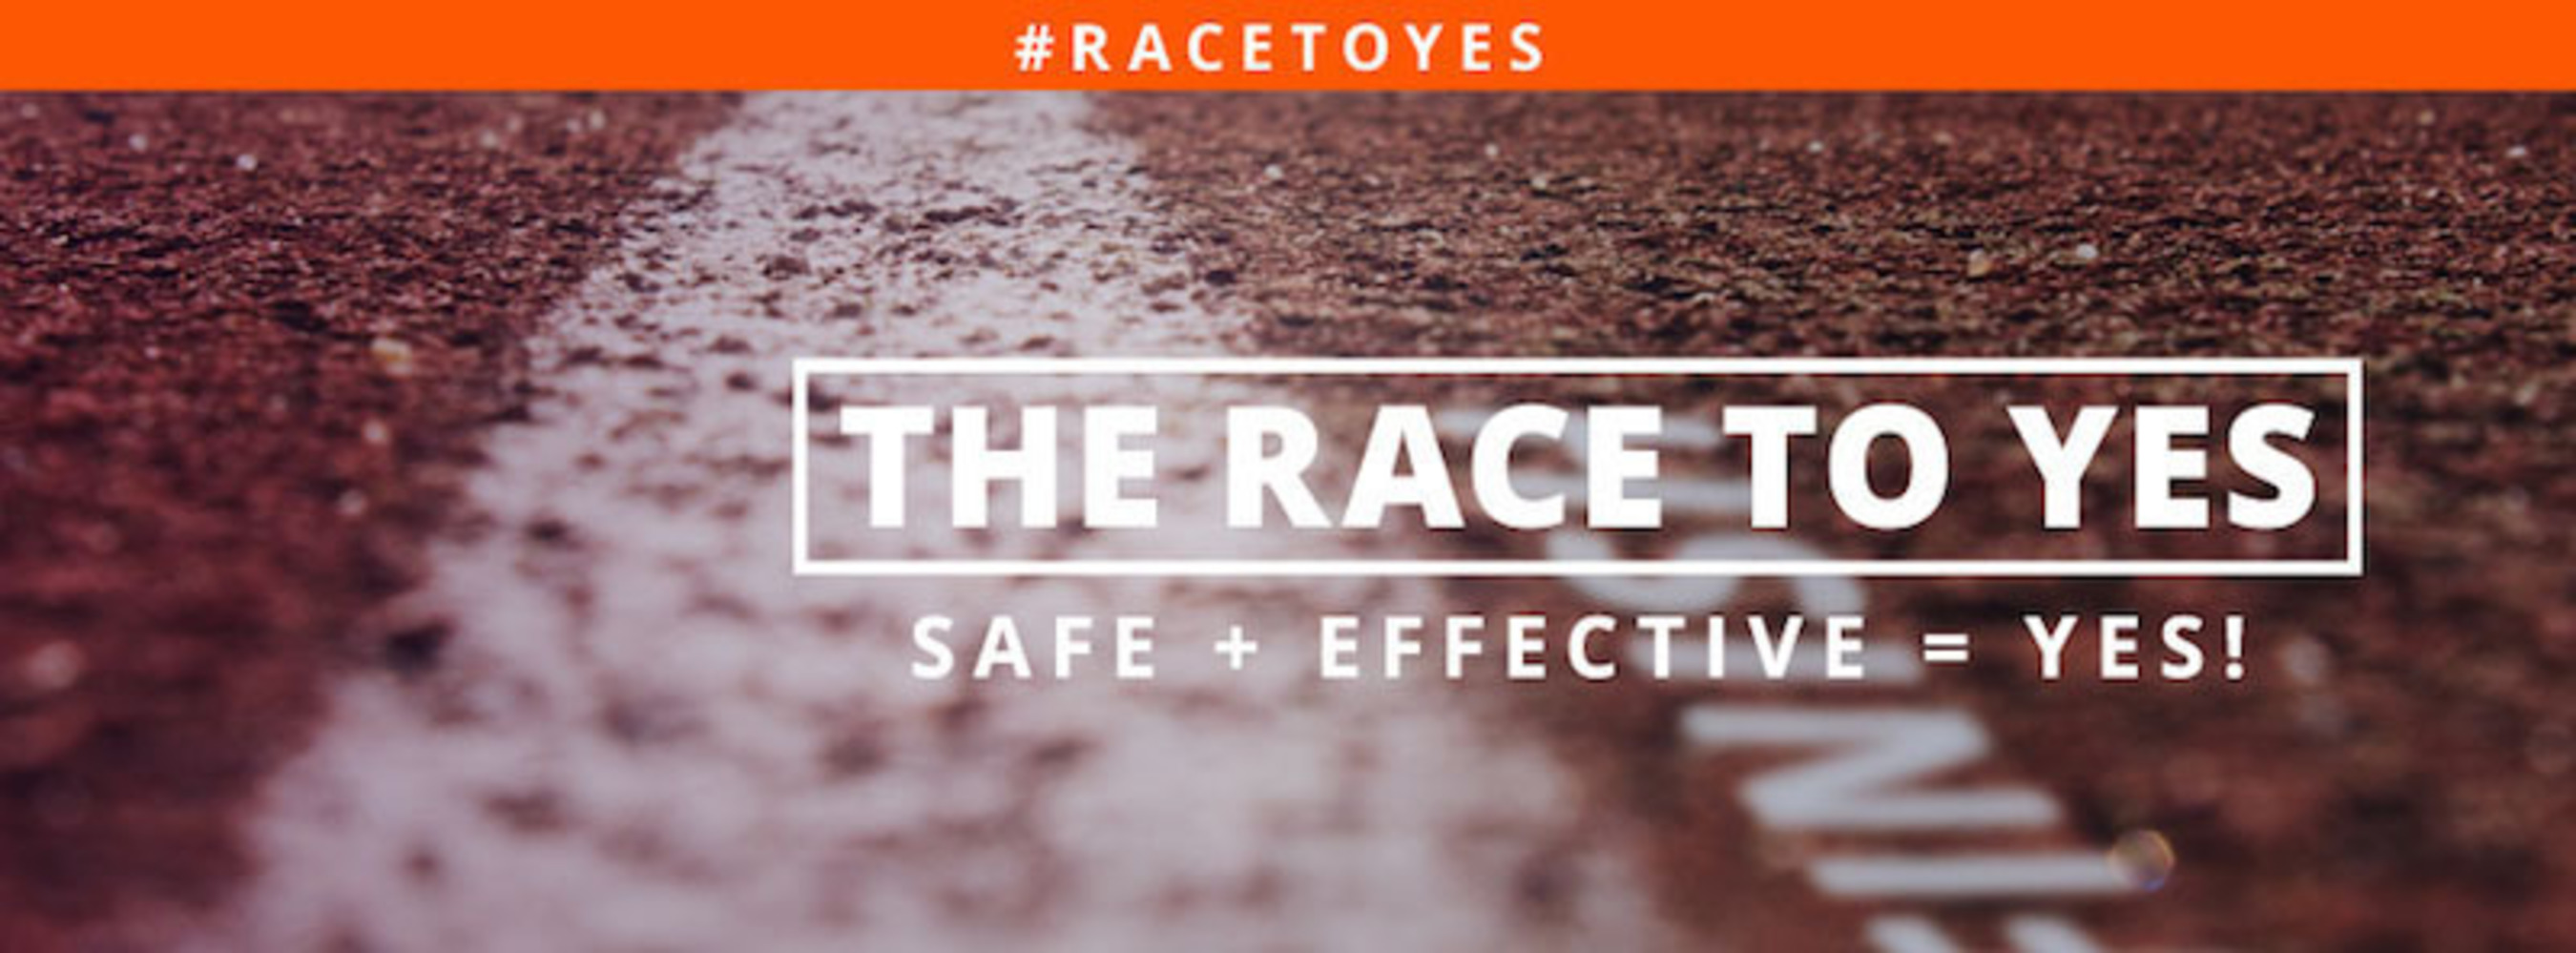 www.TheRacetoYes.Org. (PRNewsFoto/The Race to Yes) (PRNewsFoto/THE RACE TO YES)